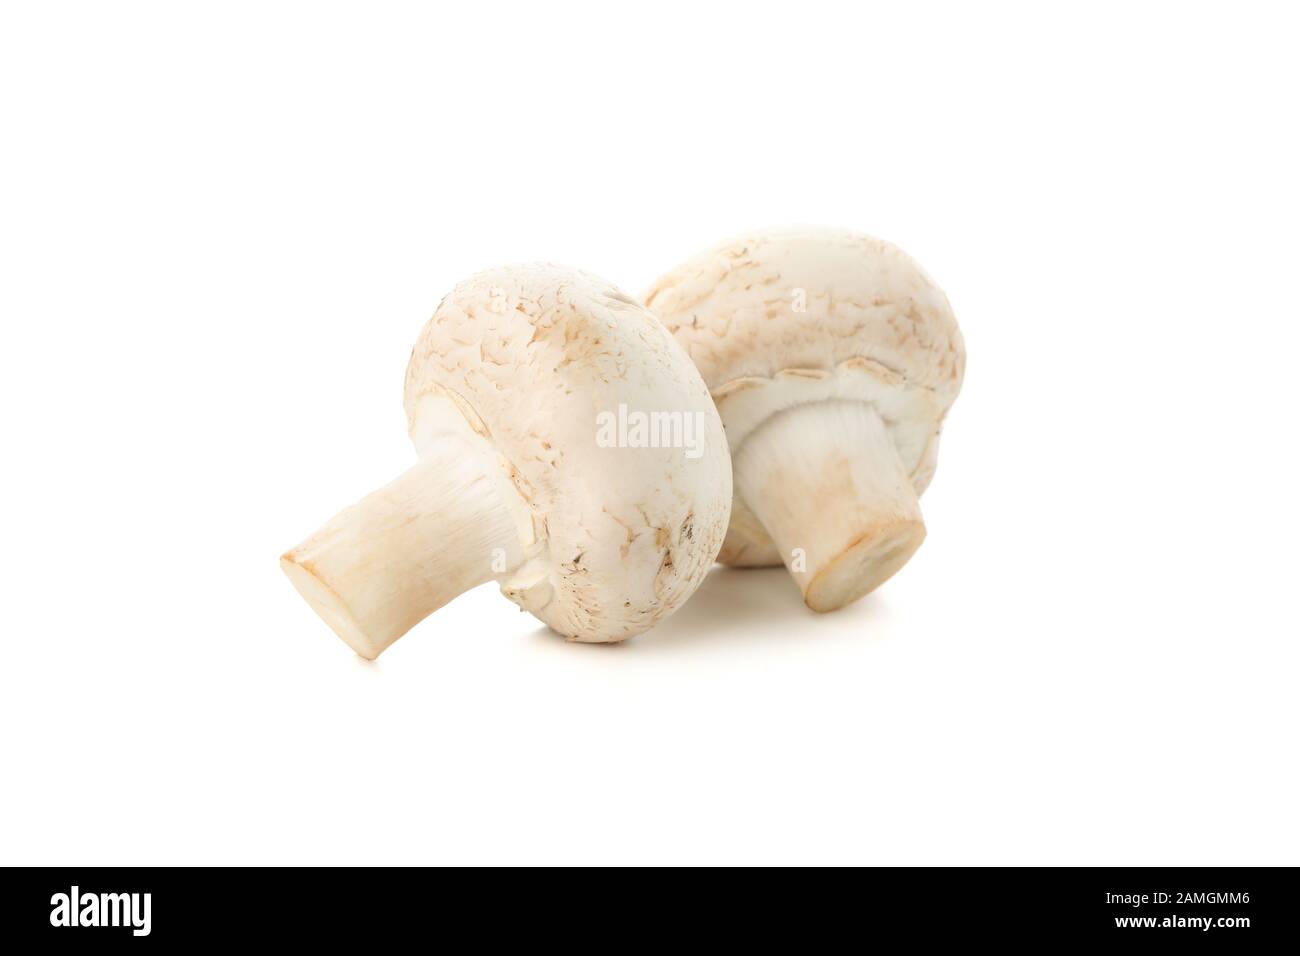 Сhampignon mushrooms isolated on white background, close up Stock Photo